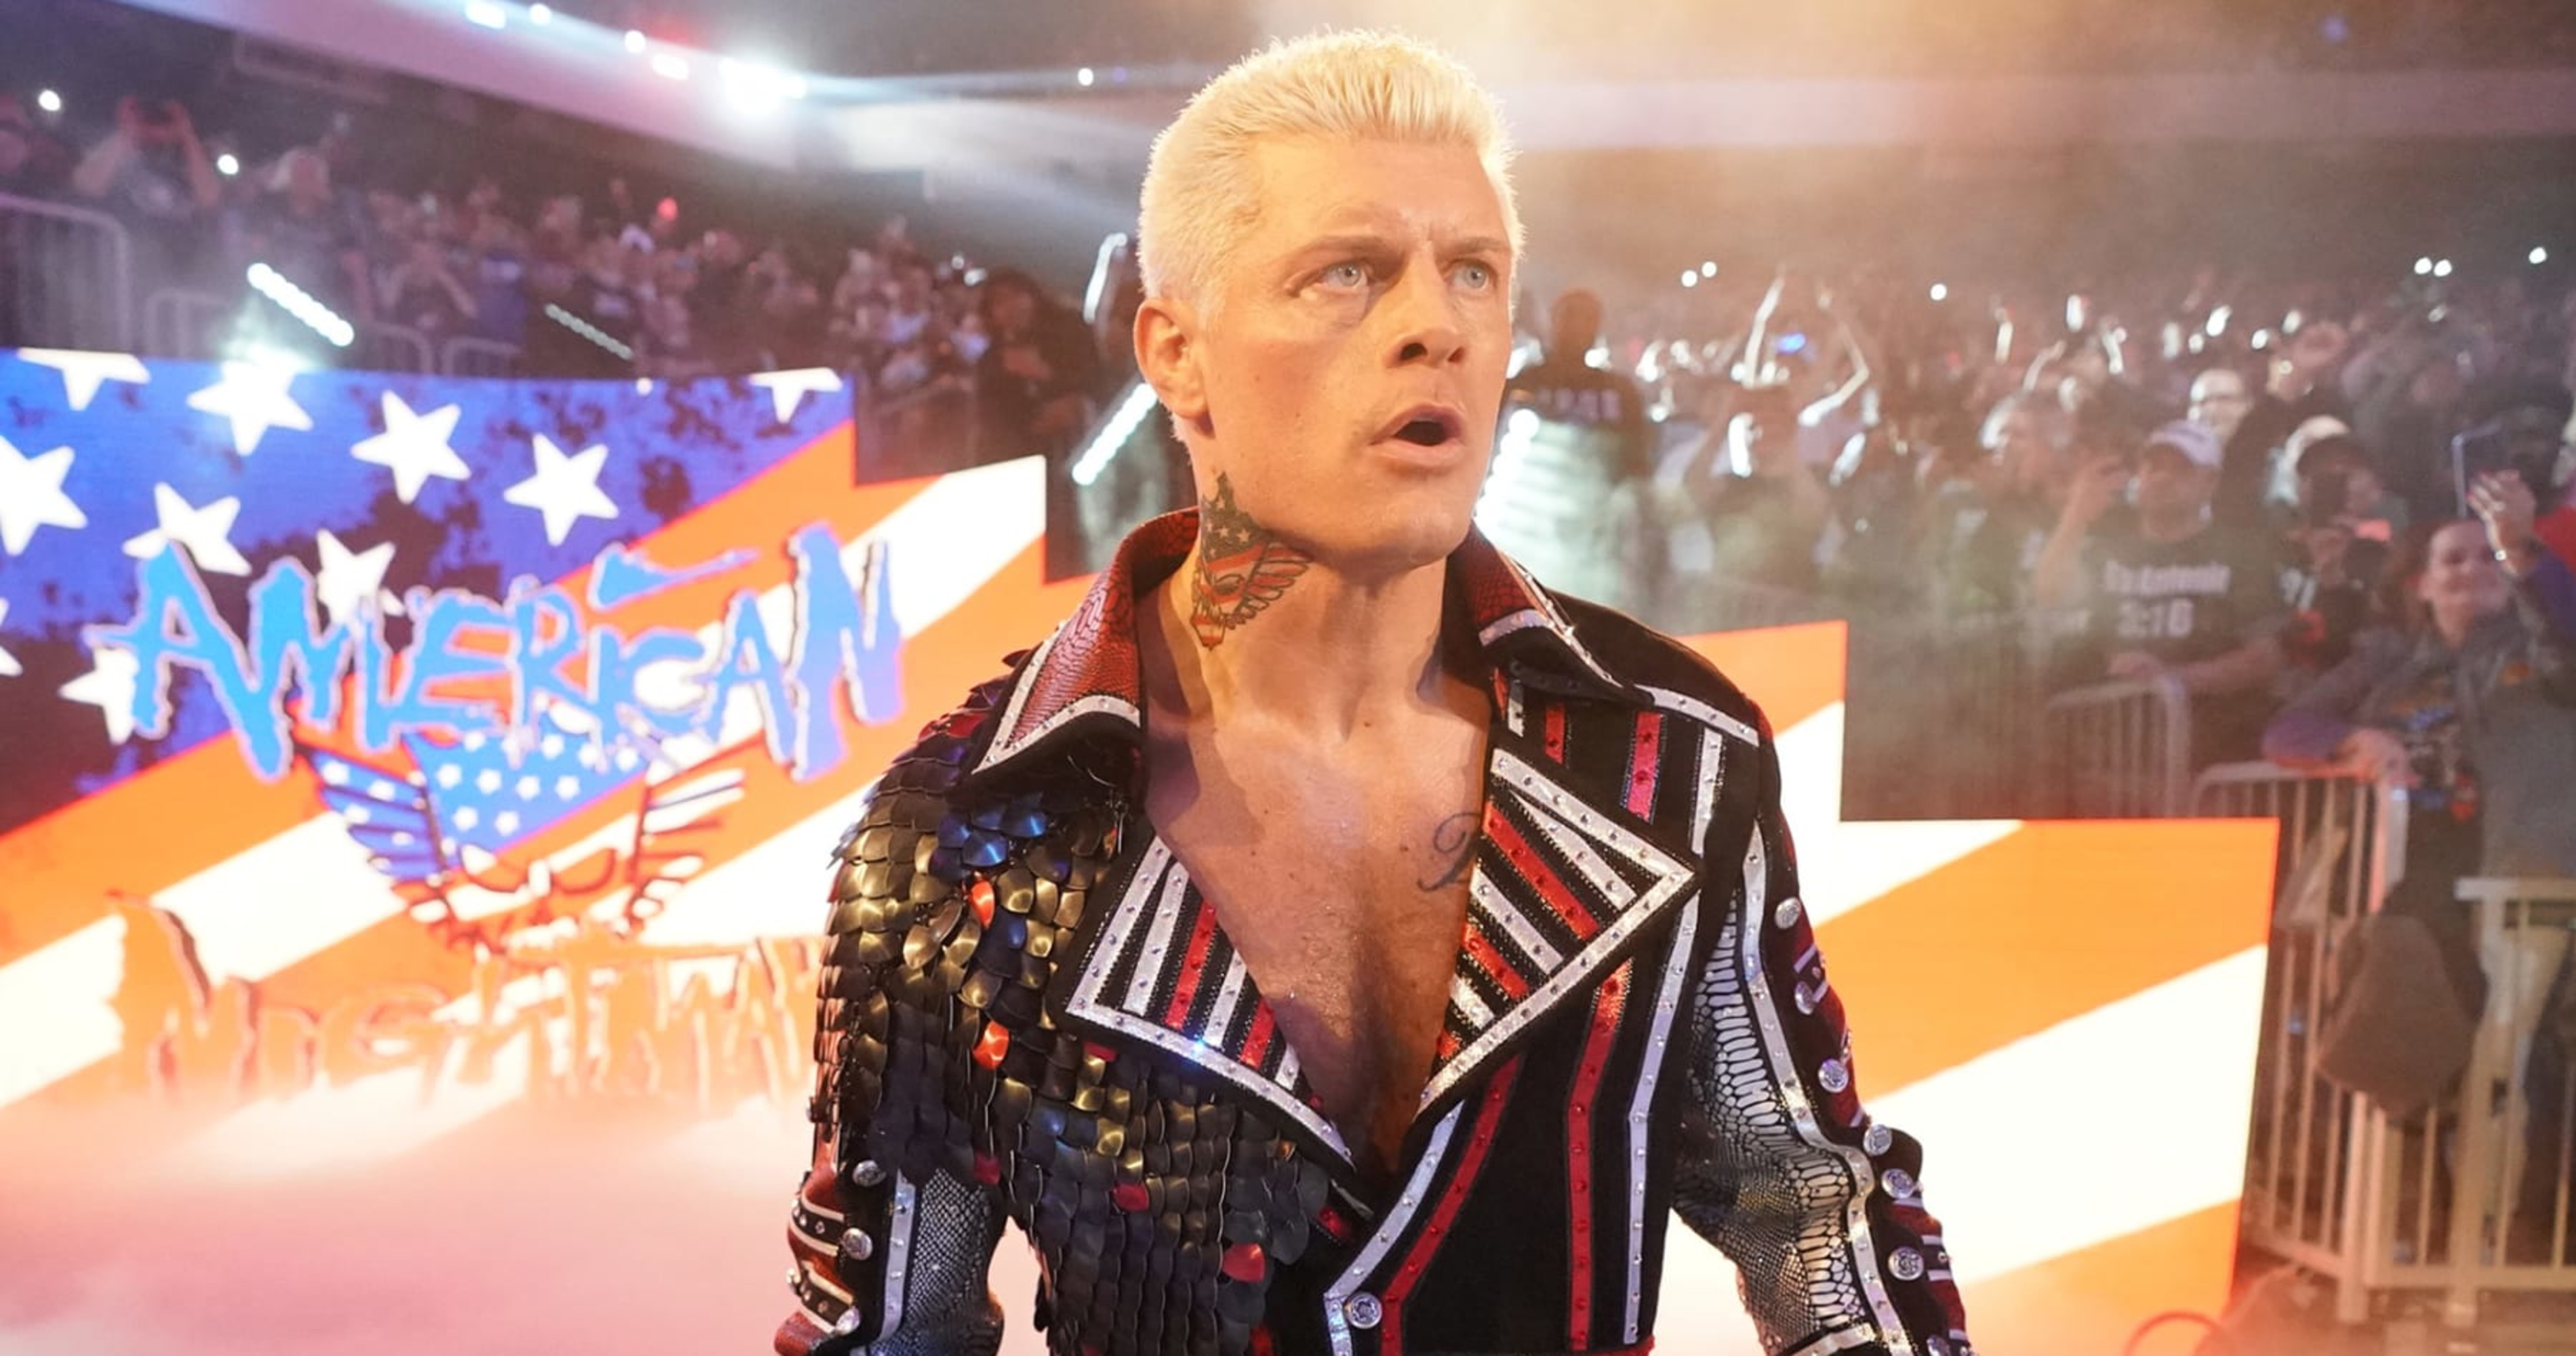 Bray Wyatt Debuts New Look at WWE Royal Rumble, Uncle Howdy and LA